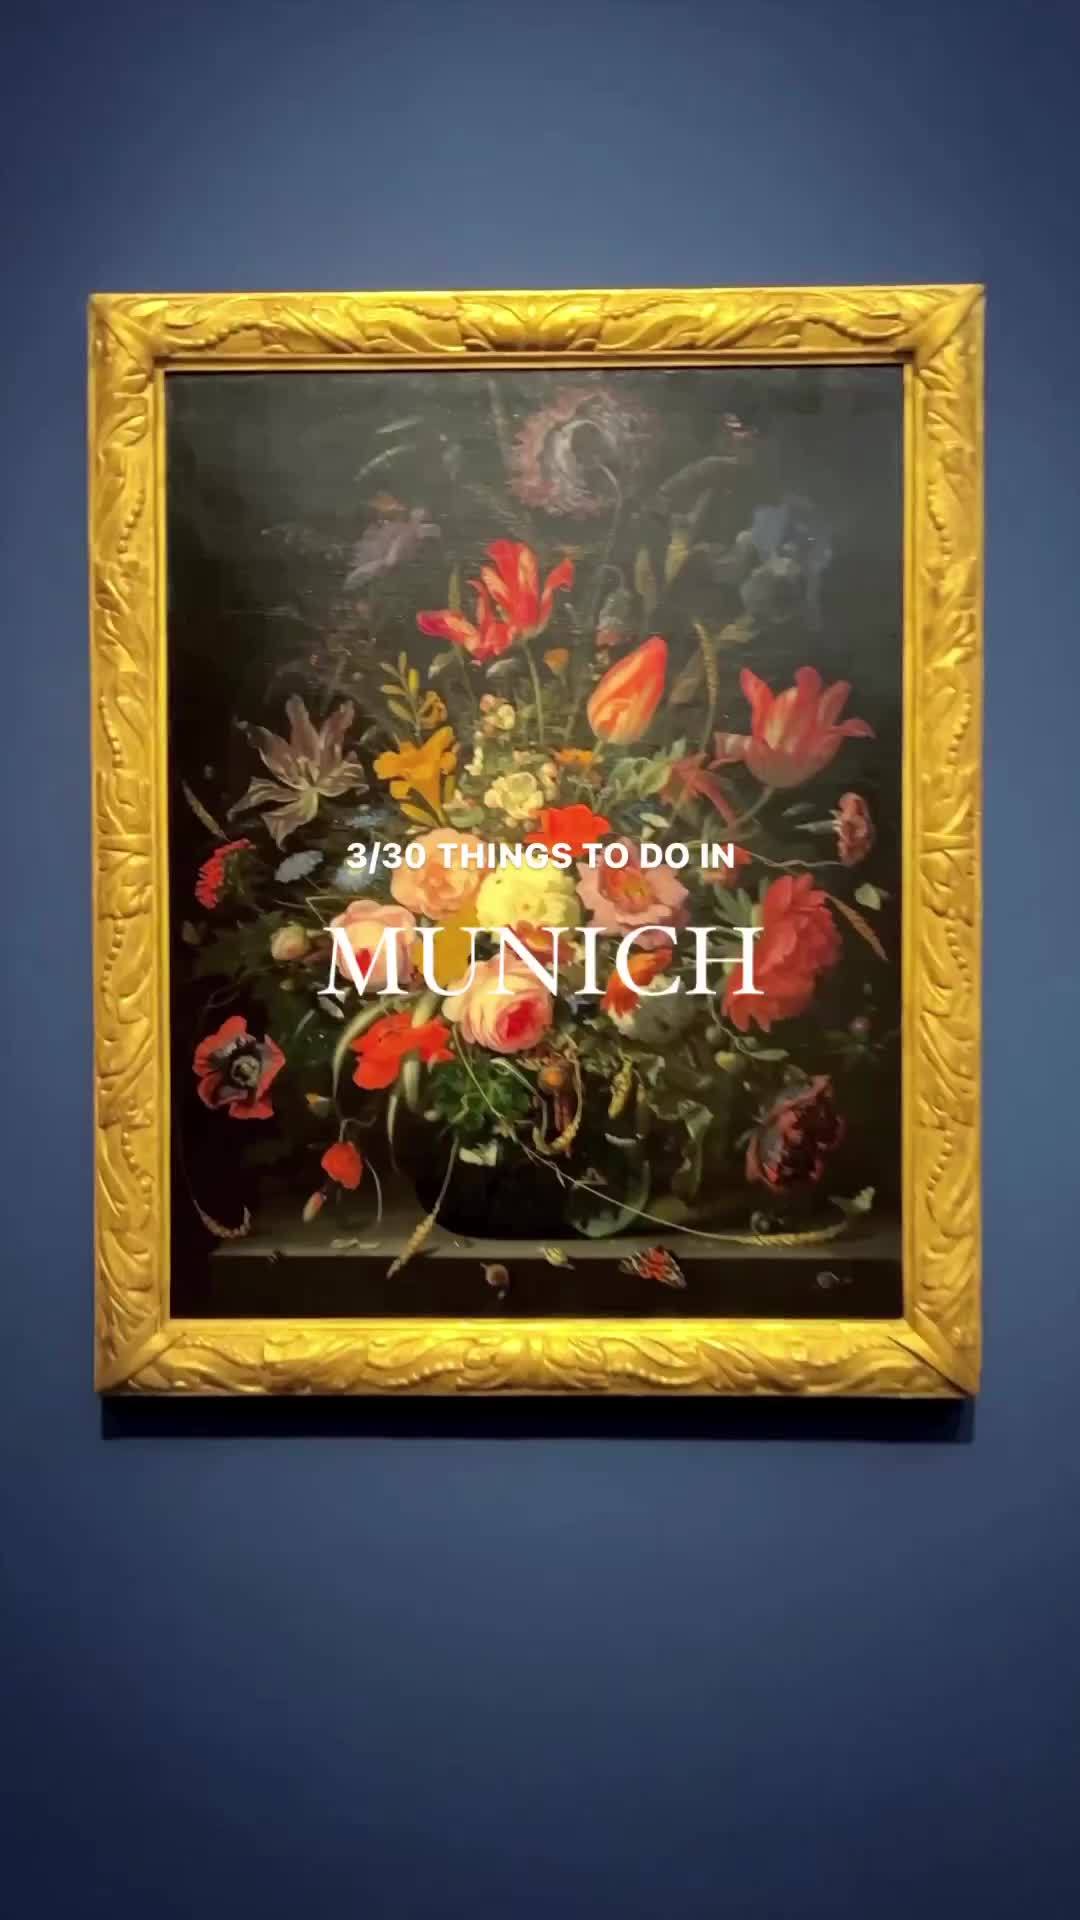 Must-See Flower Exhibition at Kunsthalle Munich